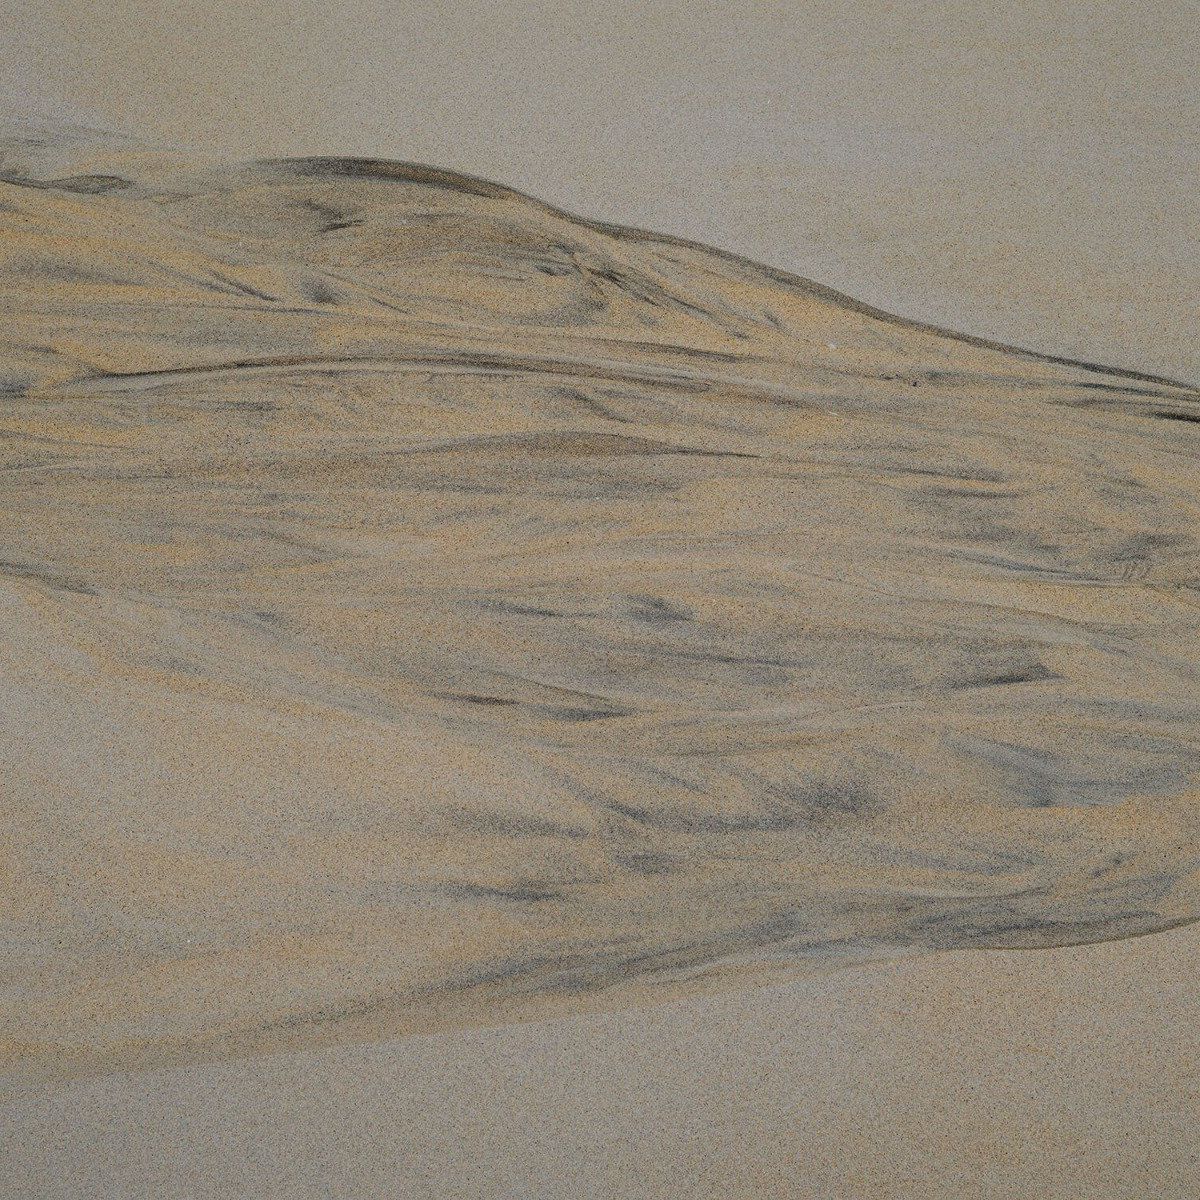 Waved sand